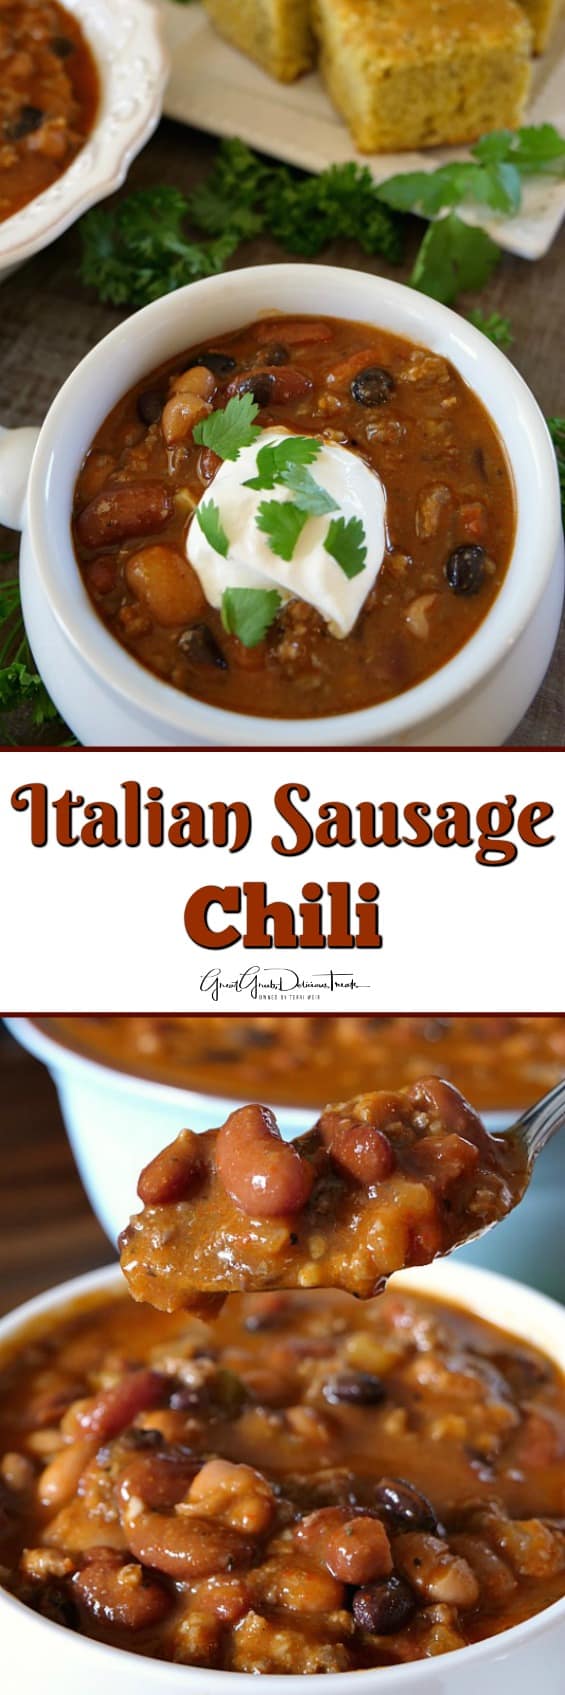 Italian Sausage Chili